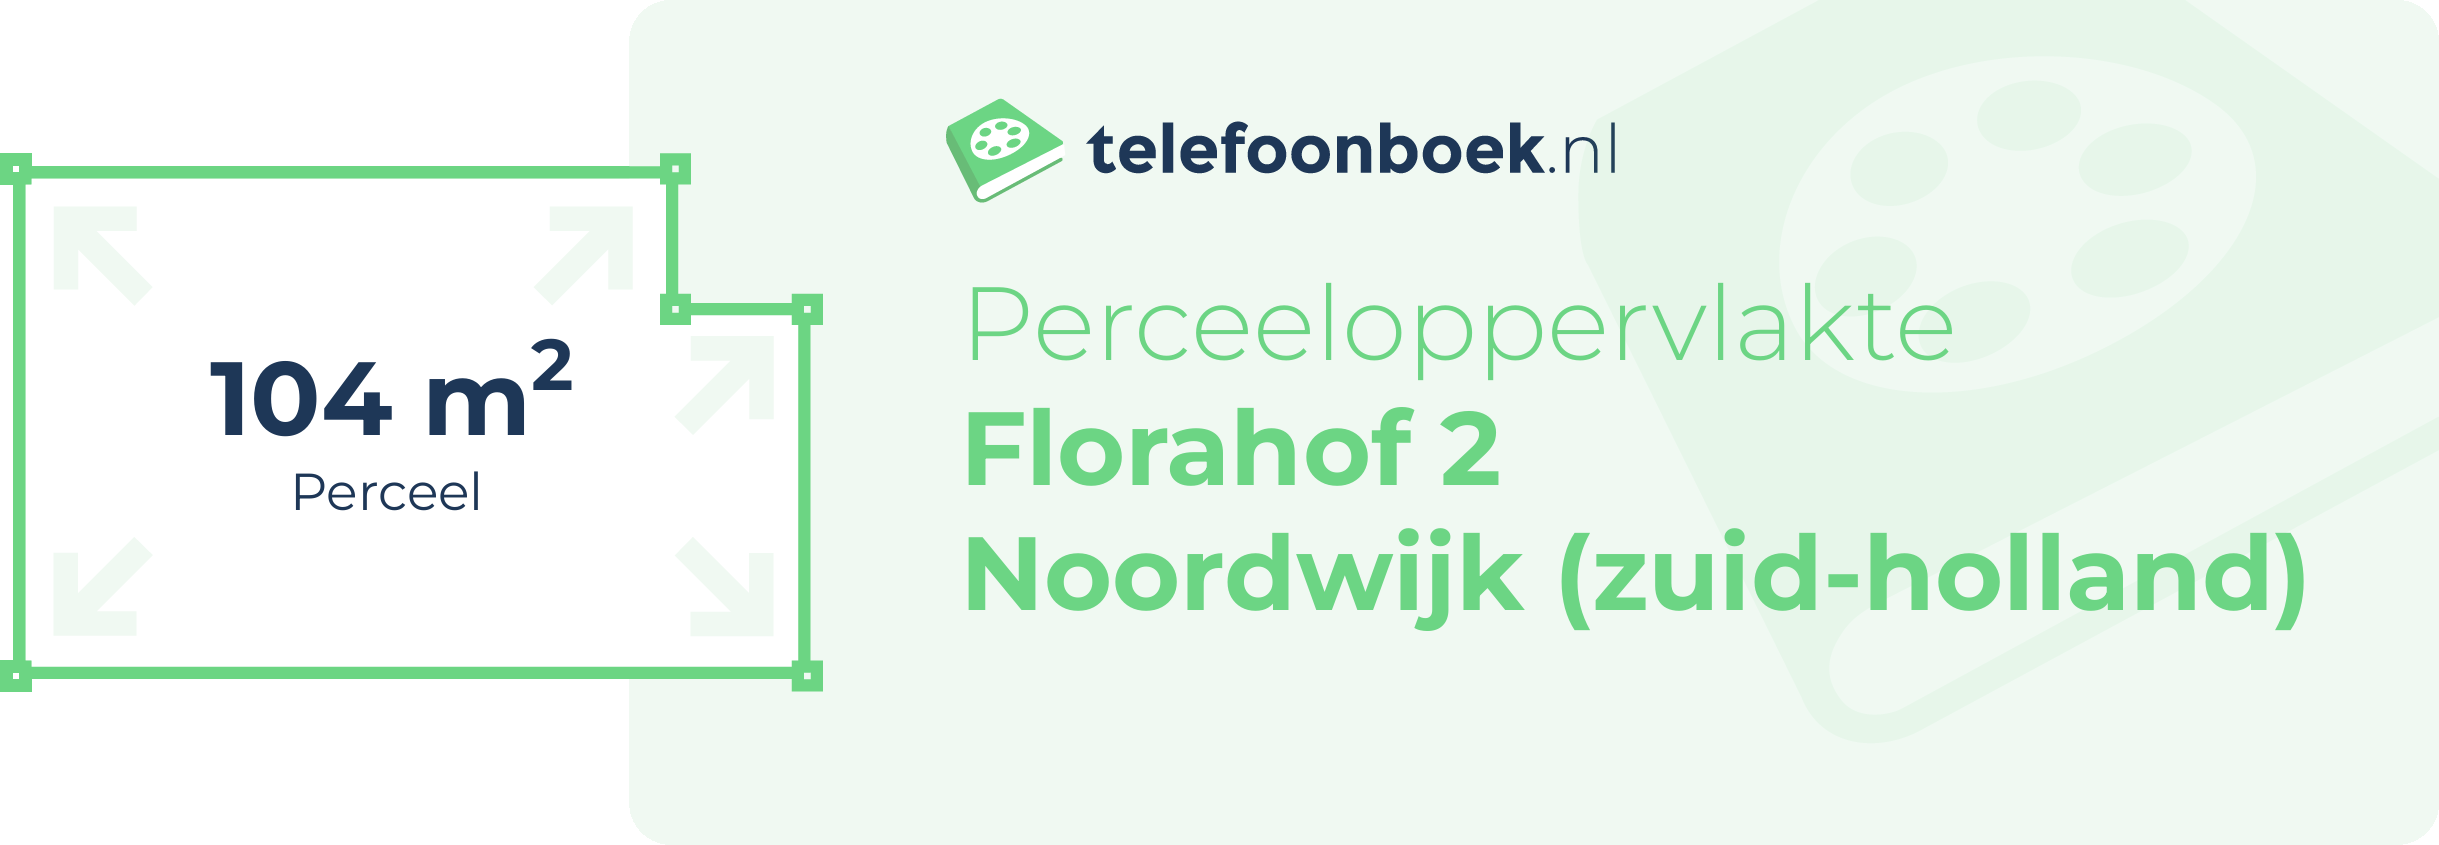 Perceeloppervlakte Florahof 2 Noordwijk (Zuid-Holland)